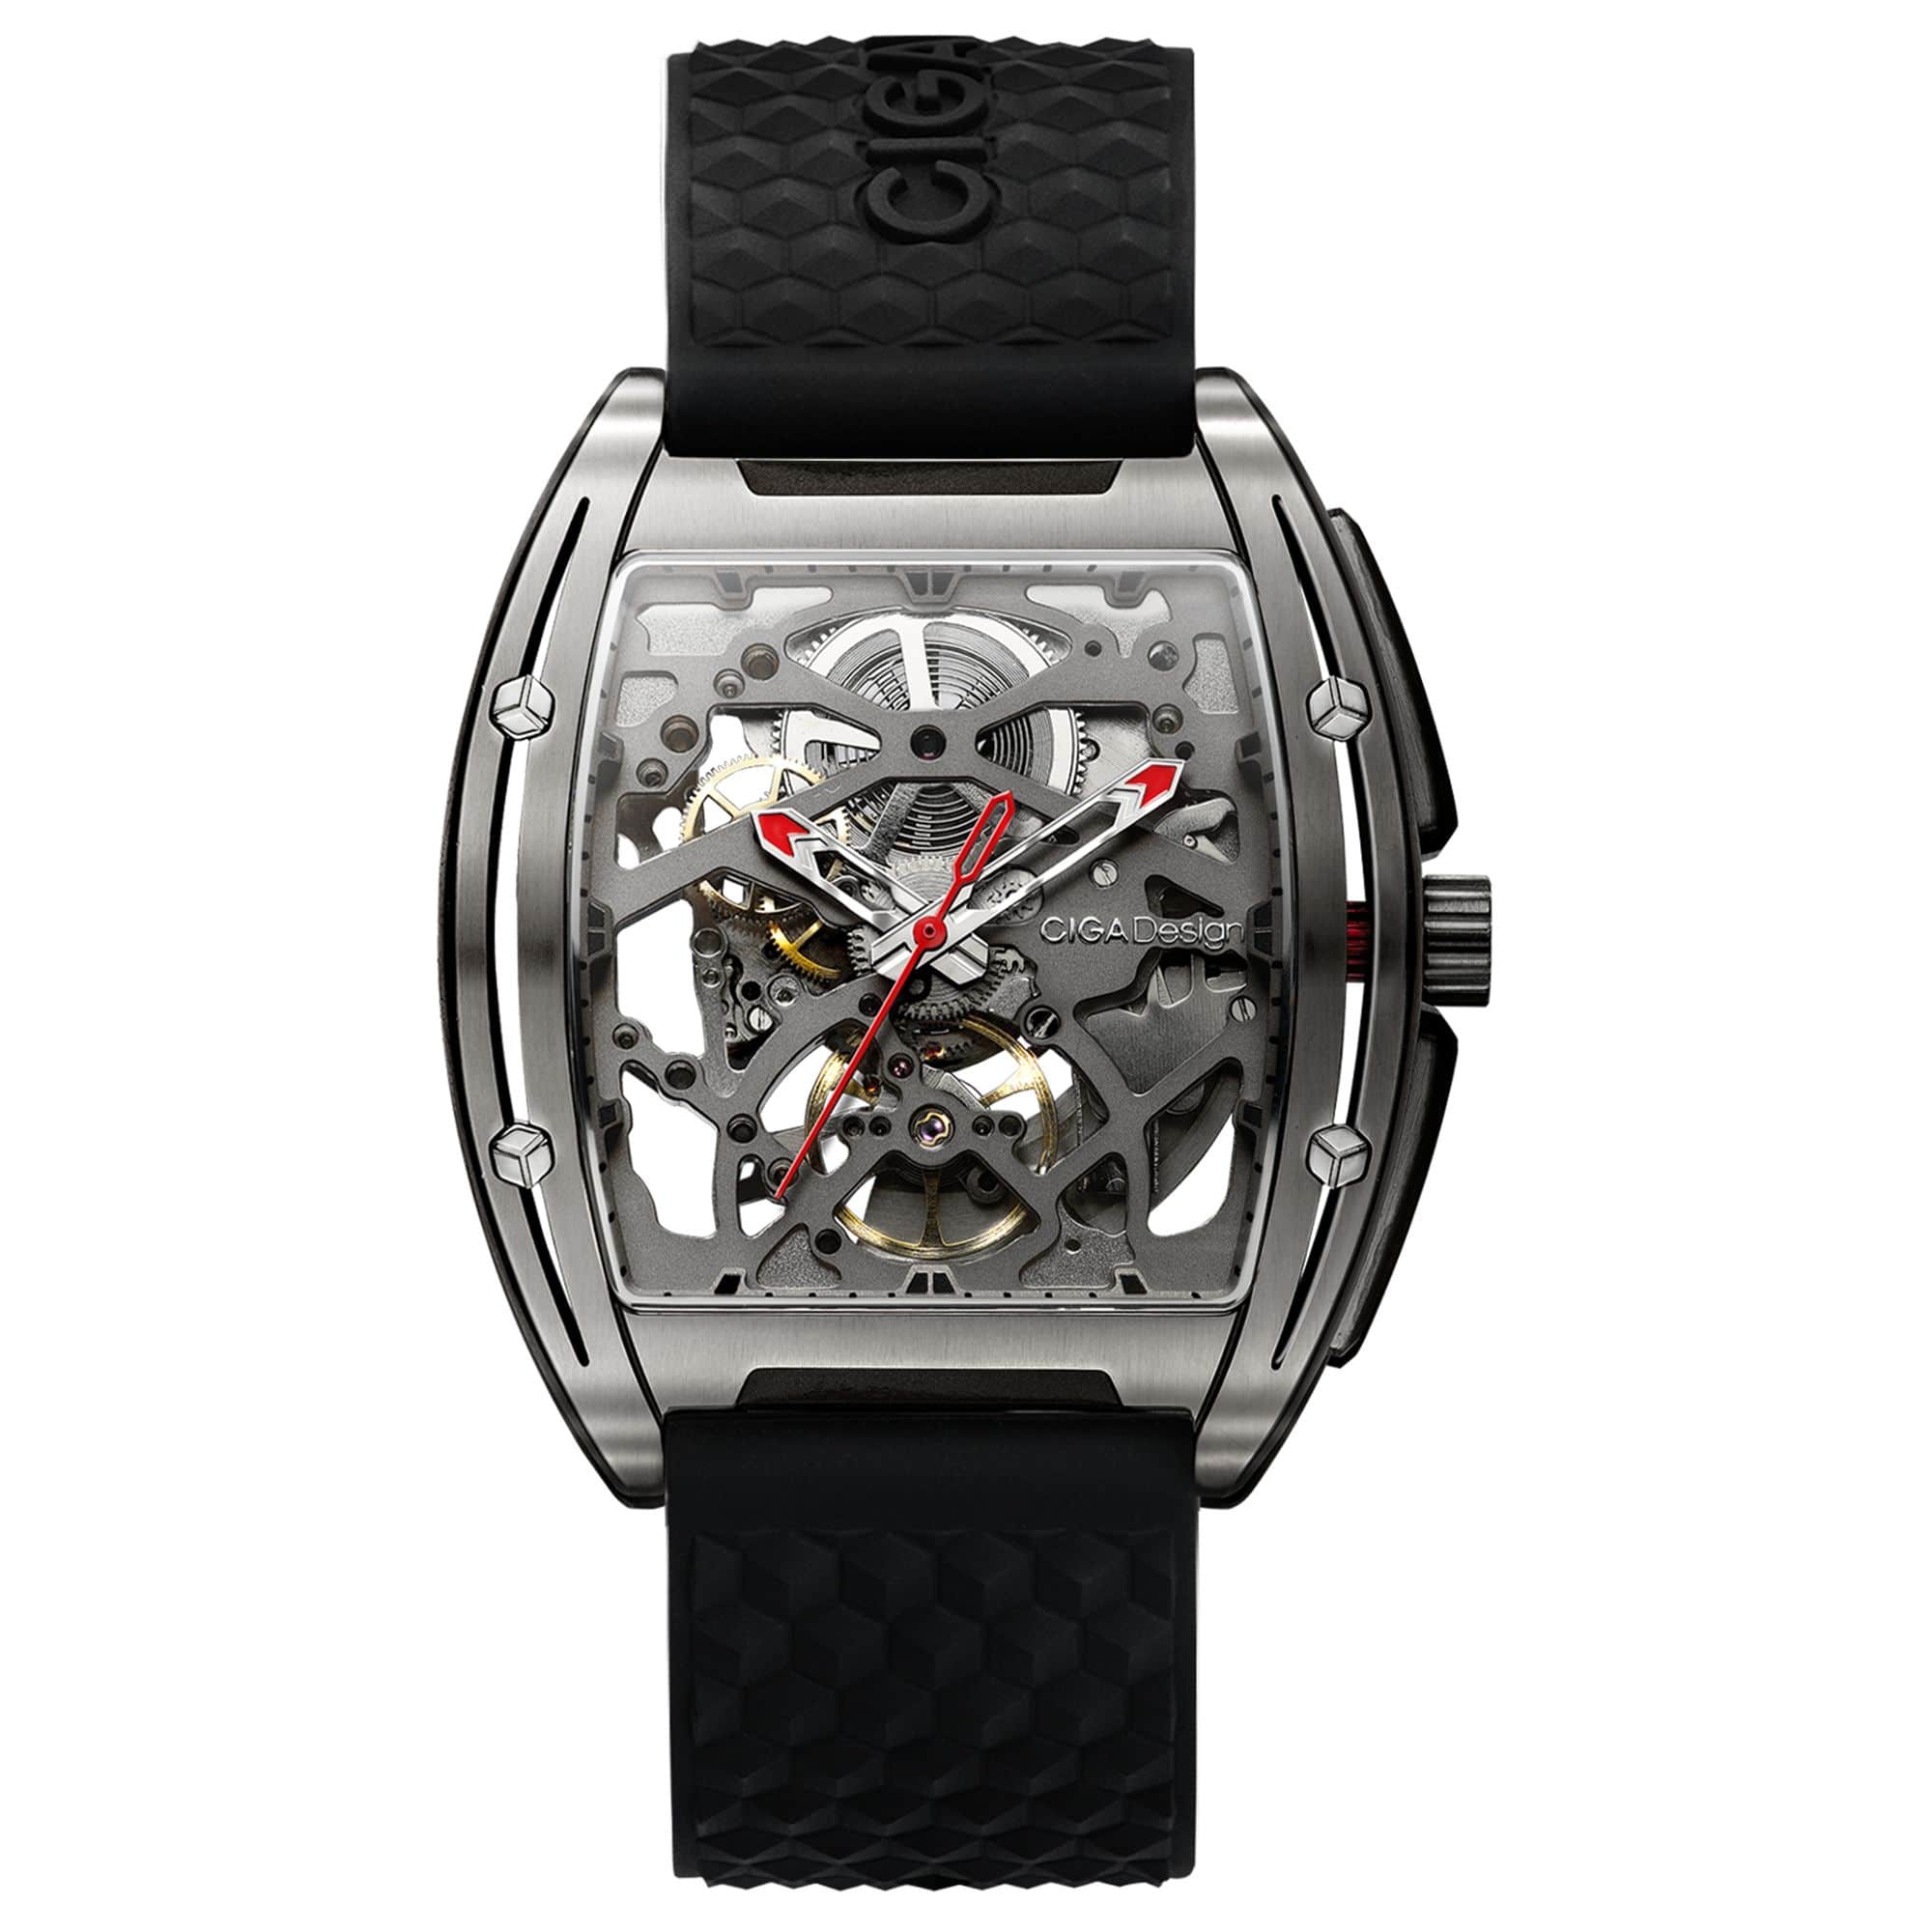 Pre-SIHH 2019: The Return of the Cartier Tonneau - Revolution Watch